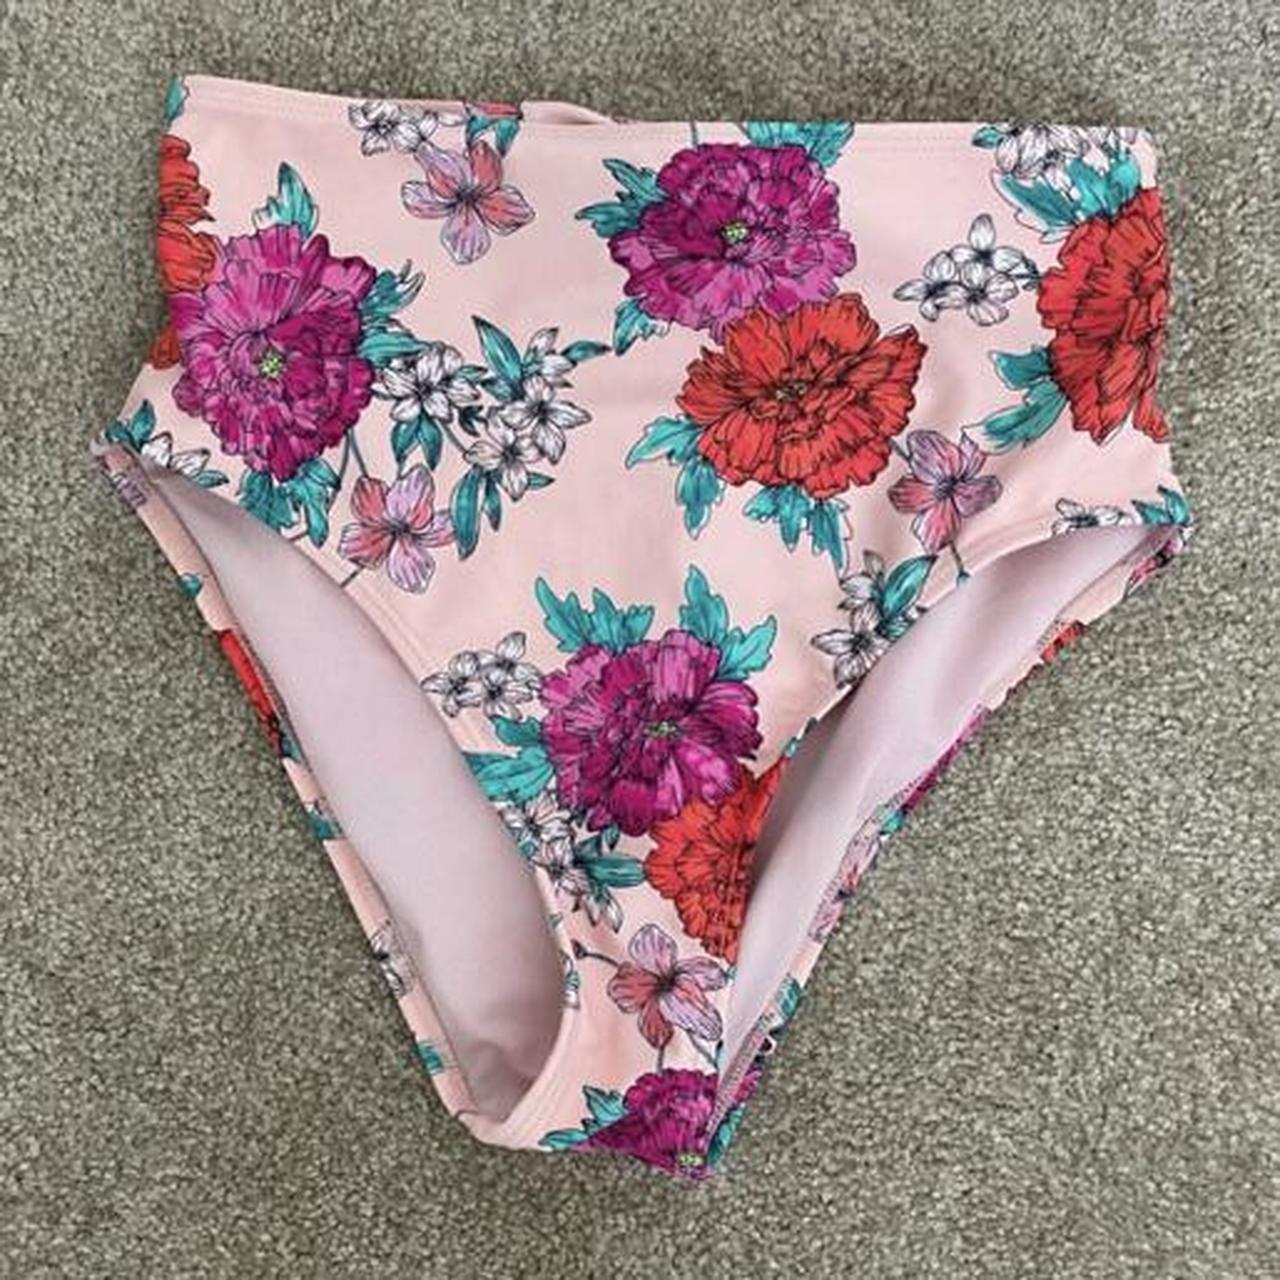 XHILARATION Pink Floral Swimsuit Top features a... - Depop